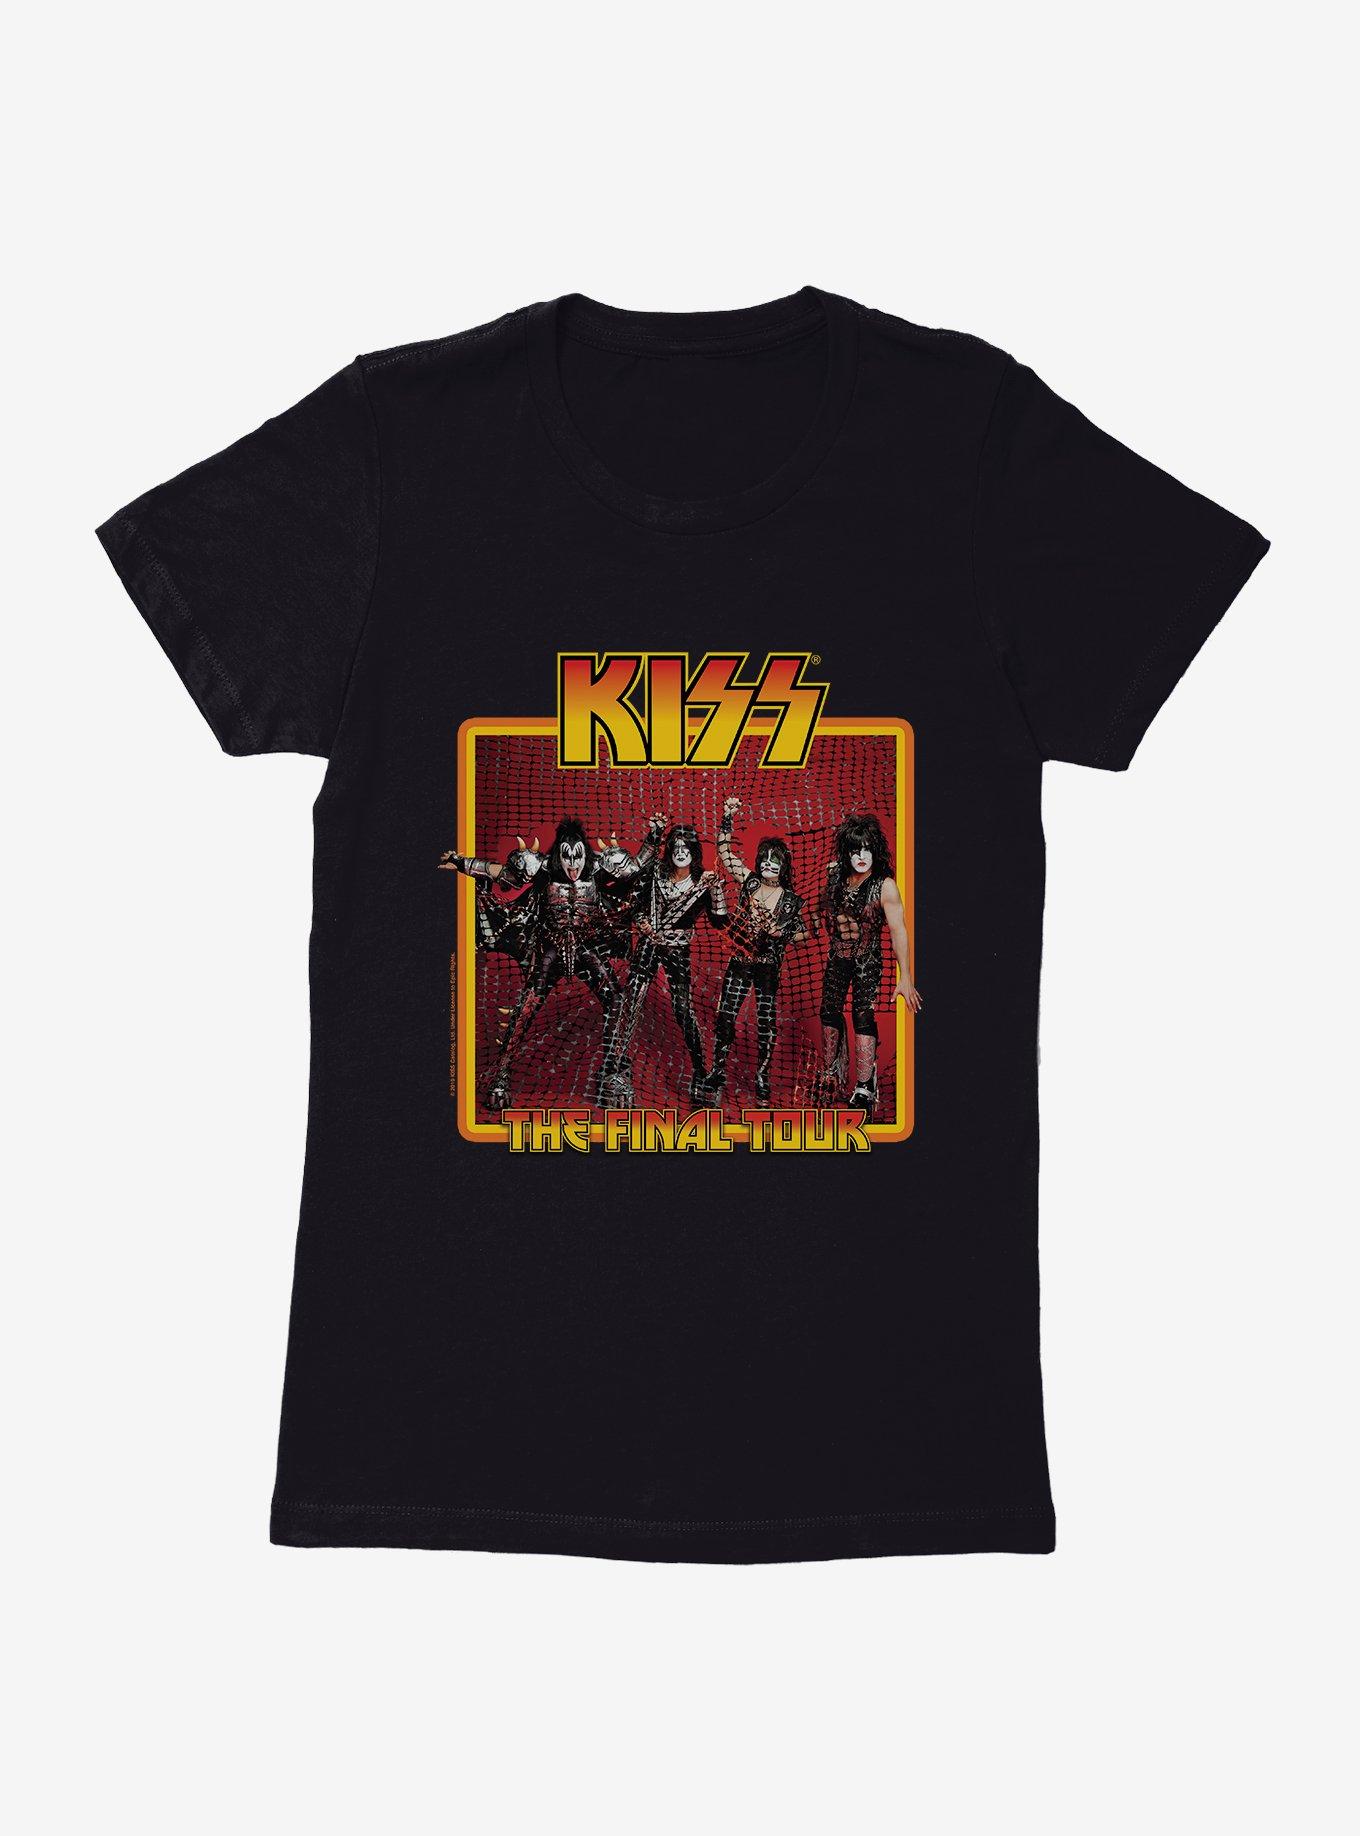 KISS The Final Tour Womens T-Shirt, BLACK, hi-res